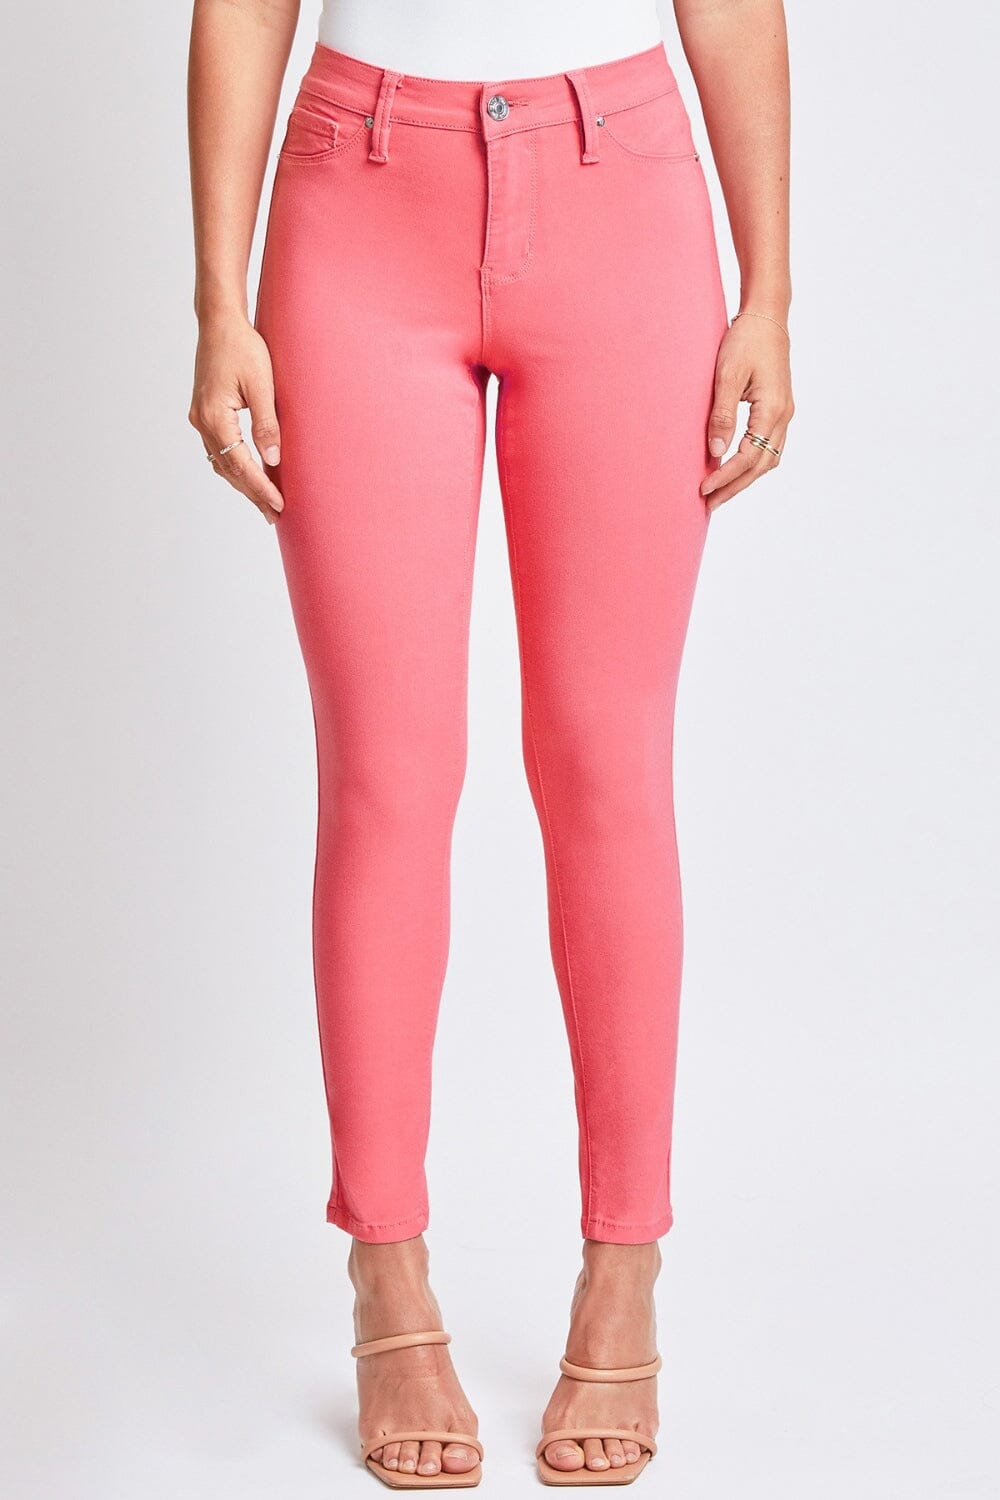 YMI Jeanswear Shell Pink Hyperstretch Mid-Rise Skinny Jeans jeans jehouze 